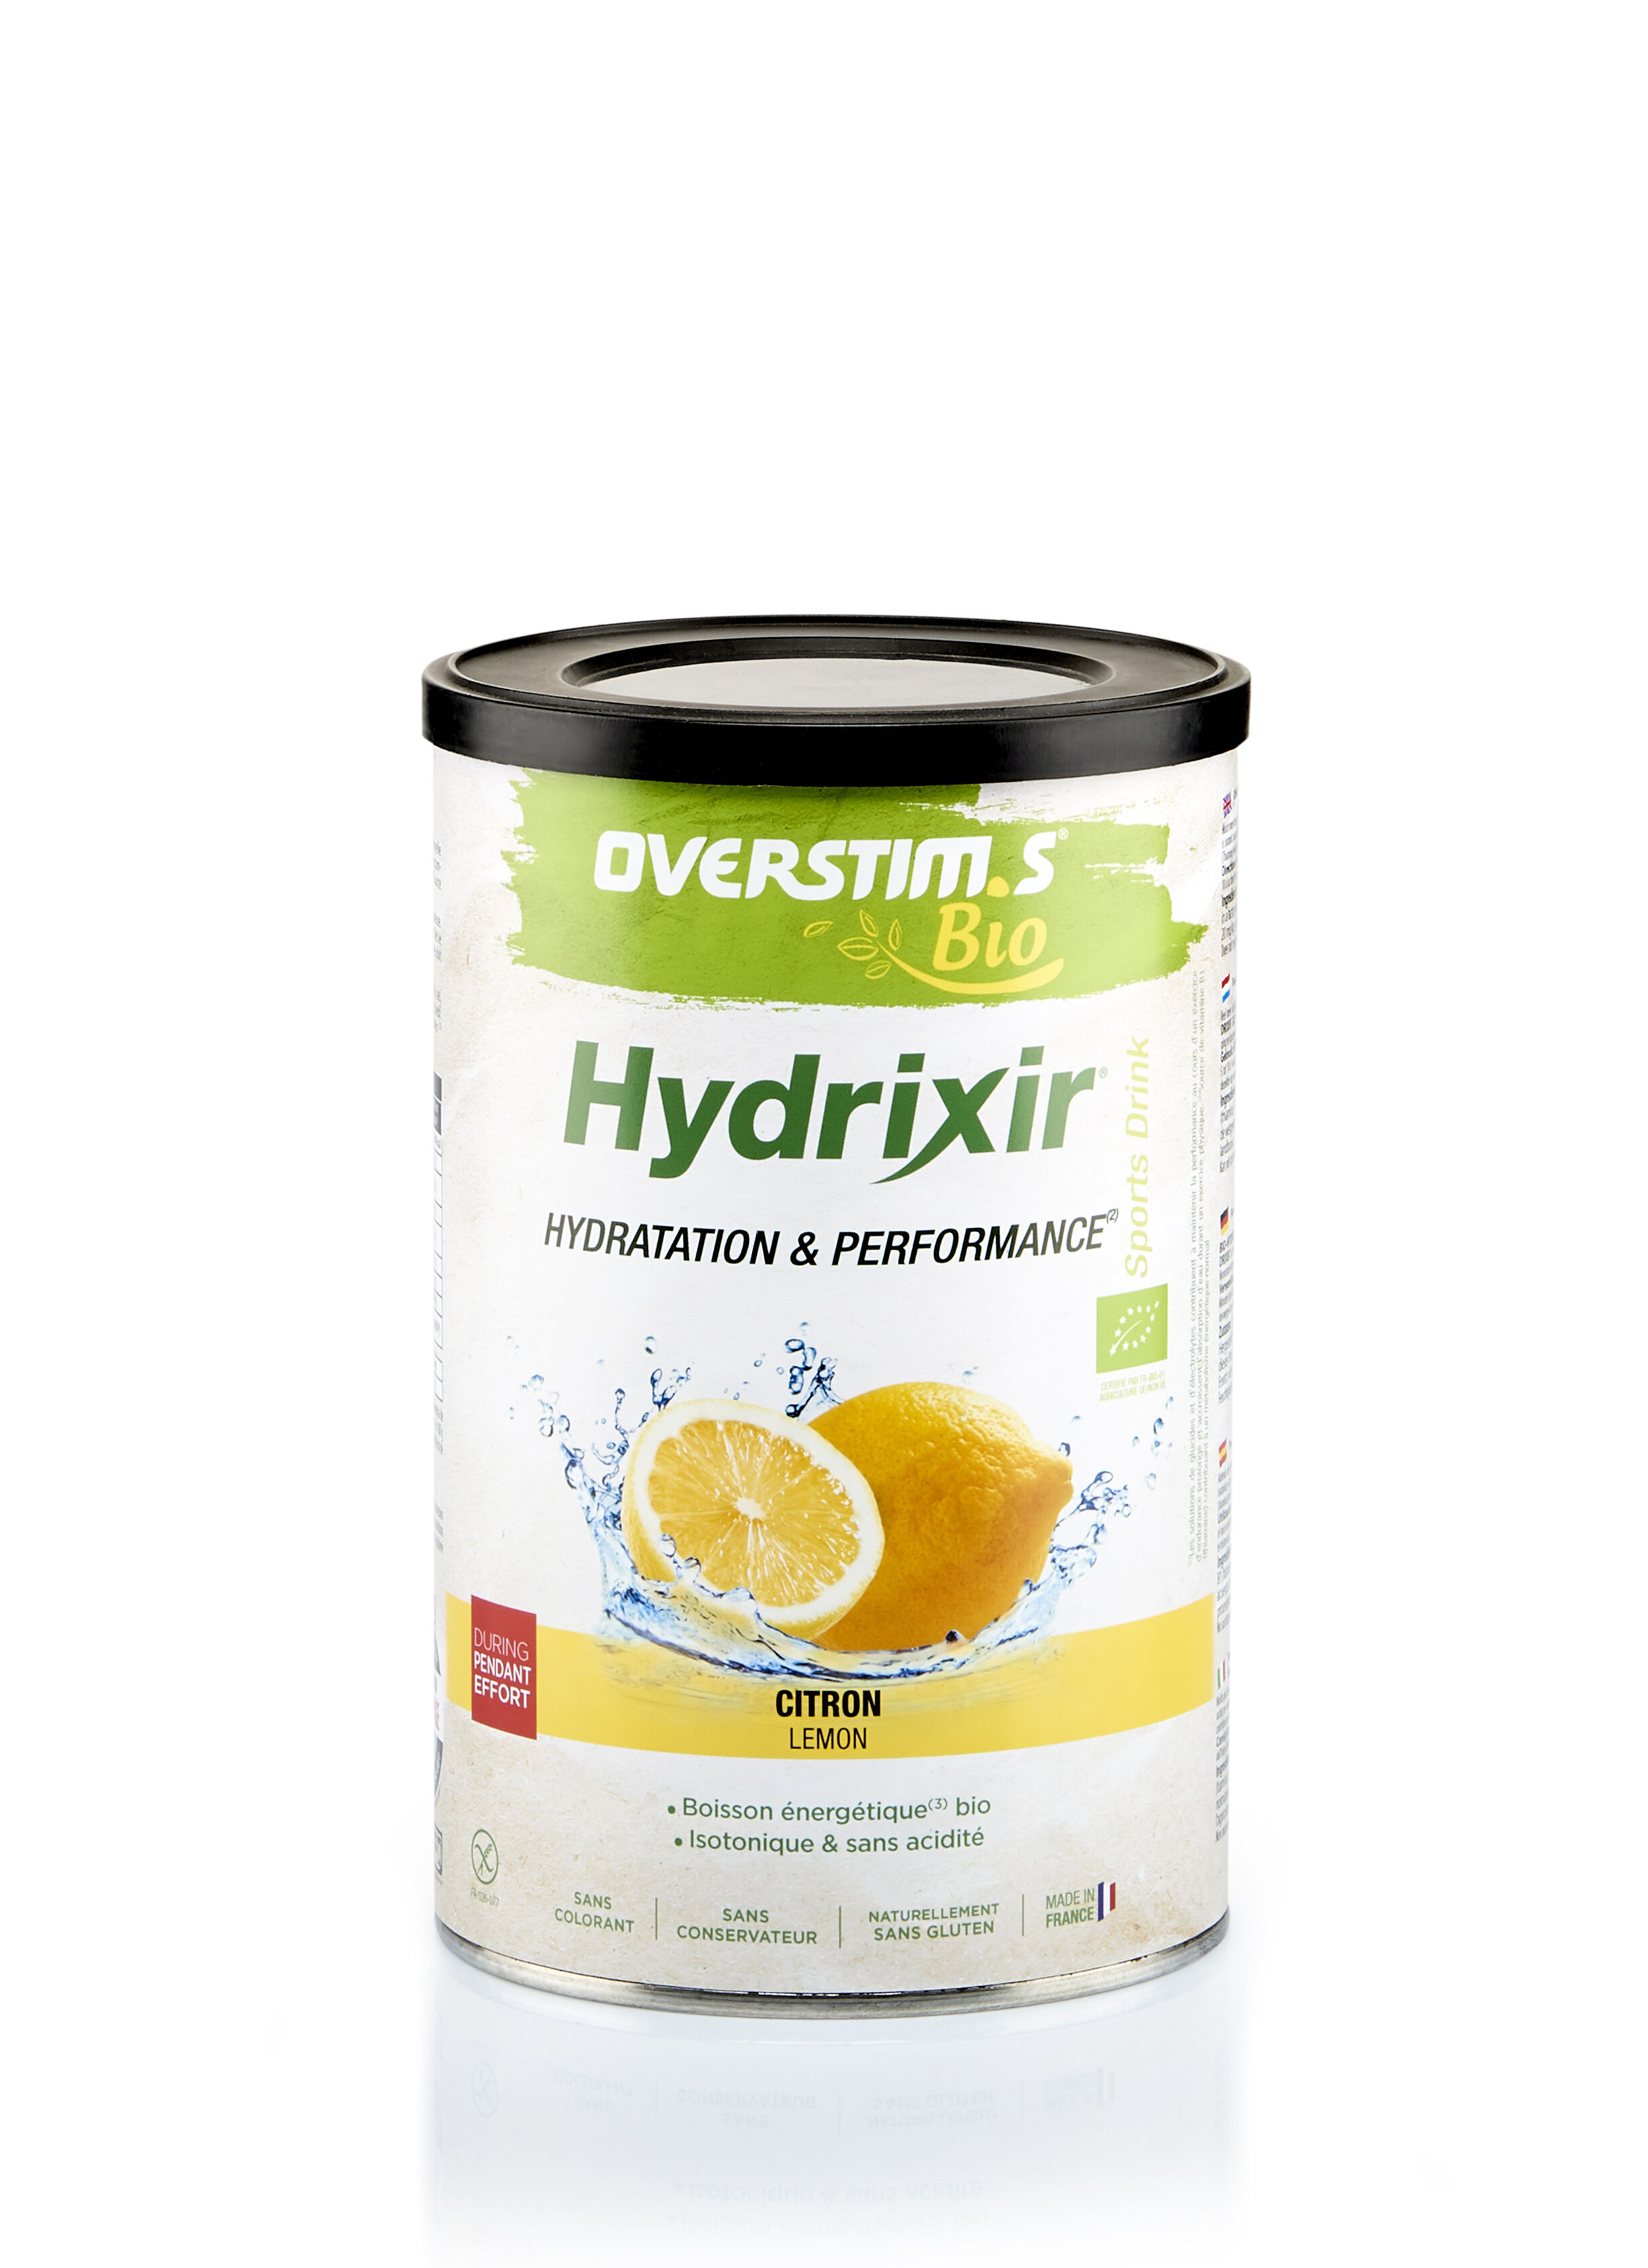 Overstim.s Hydrixir Antioxydant Bio - Energidrik